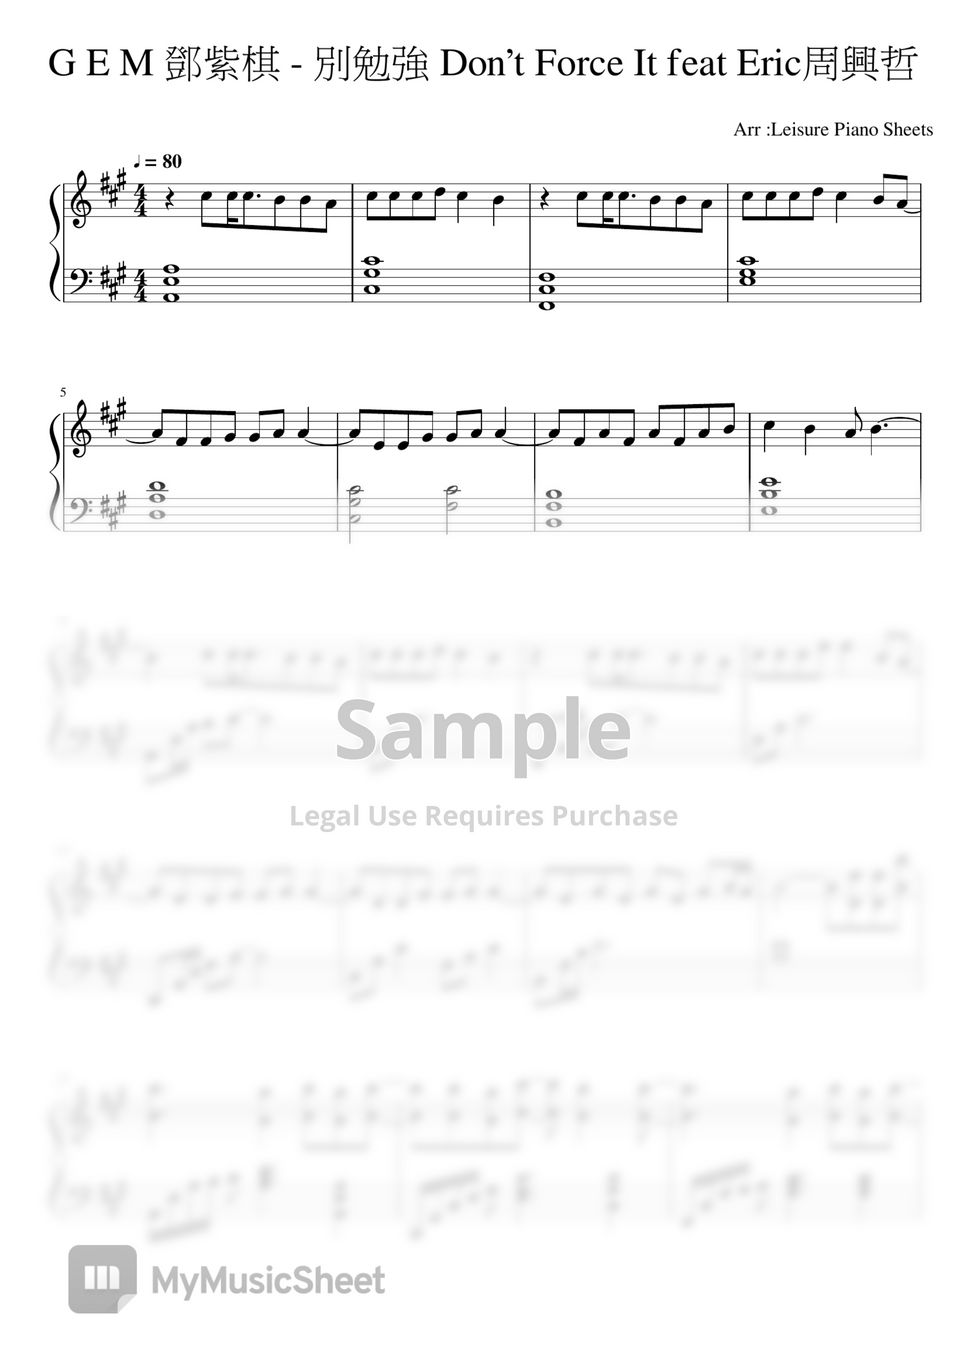 G.E.M 鄧紫棋 - 別勉強 别勉强 Don’t Force It by Leisure Piano Sheets